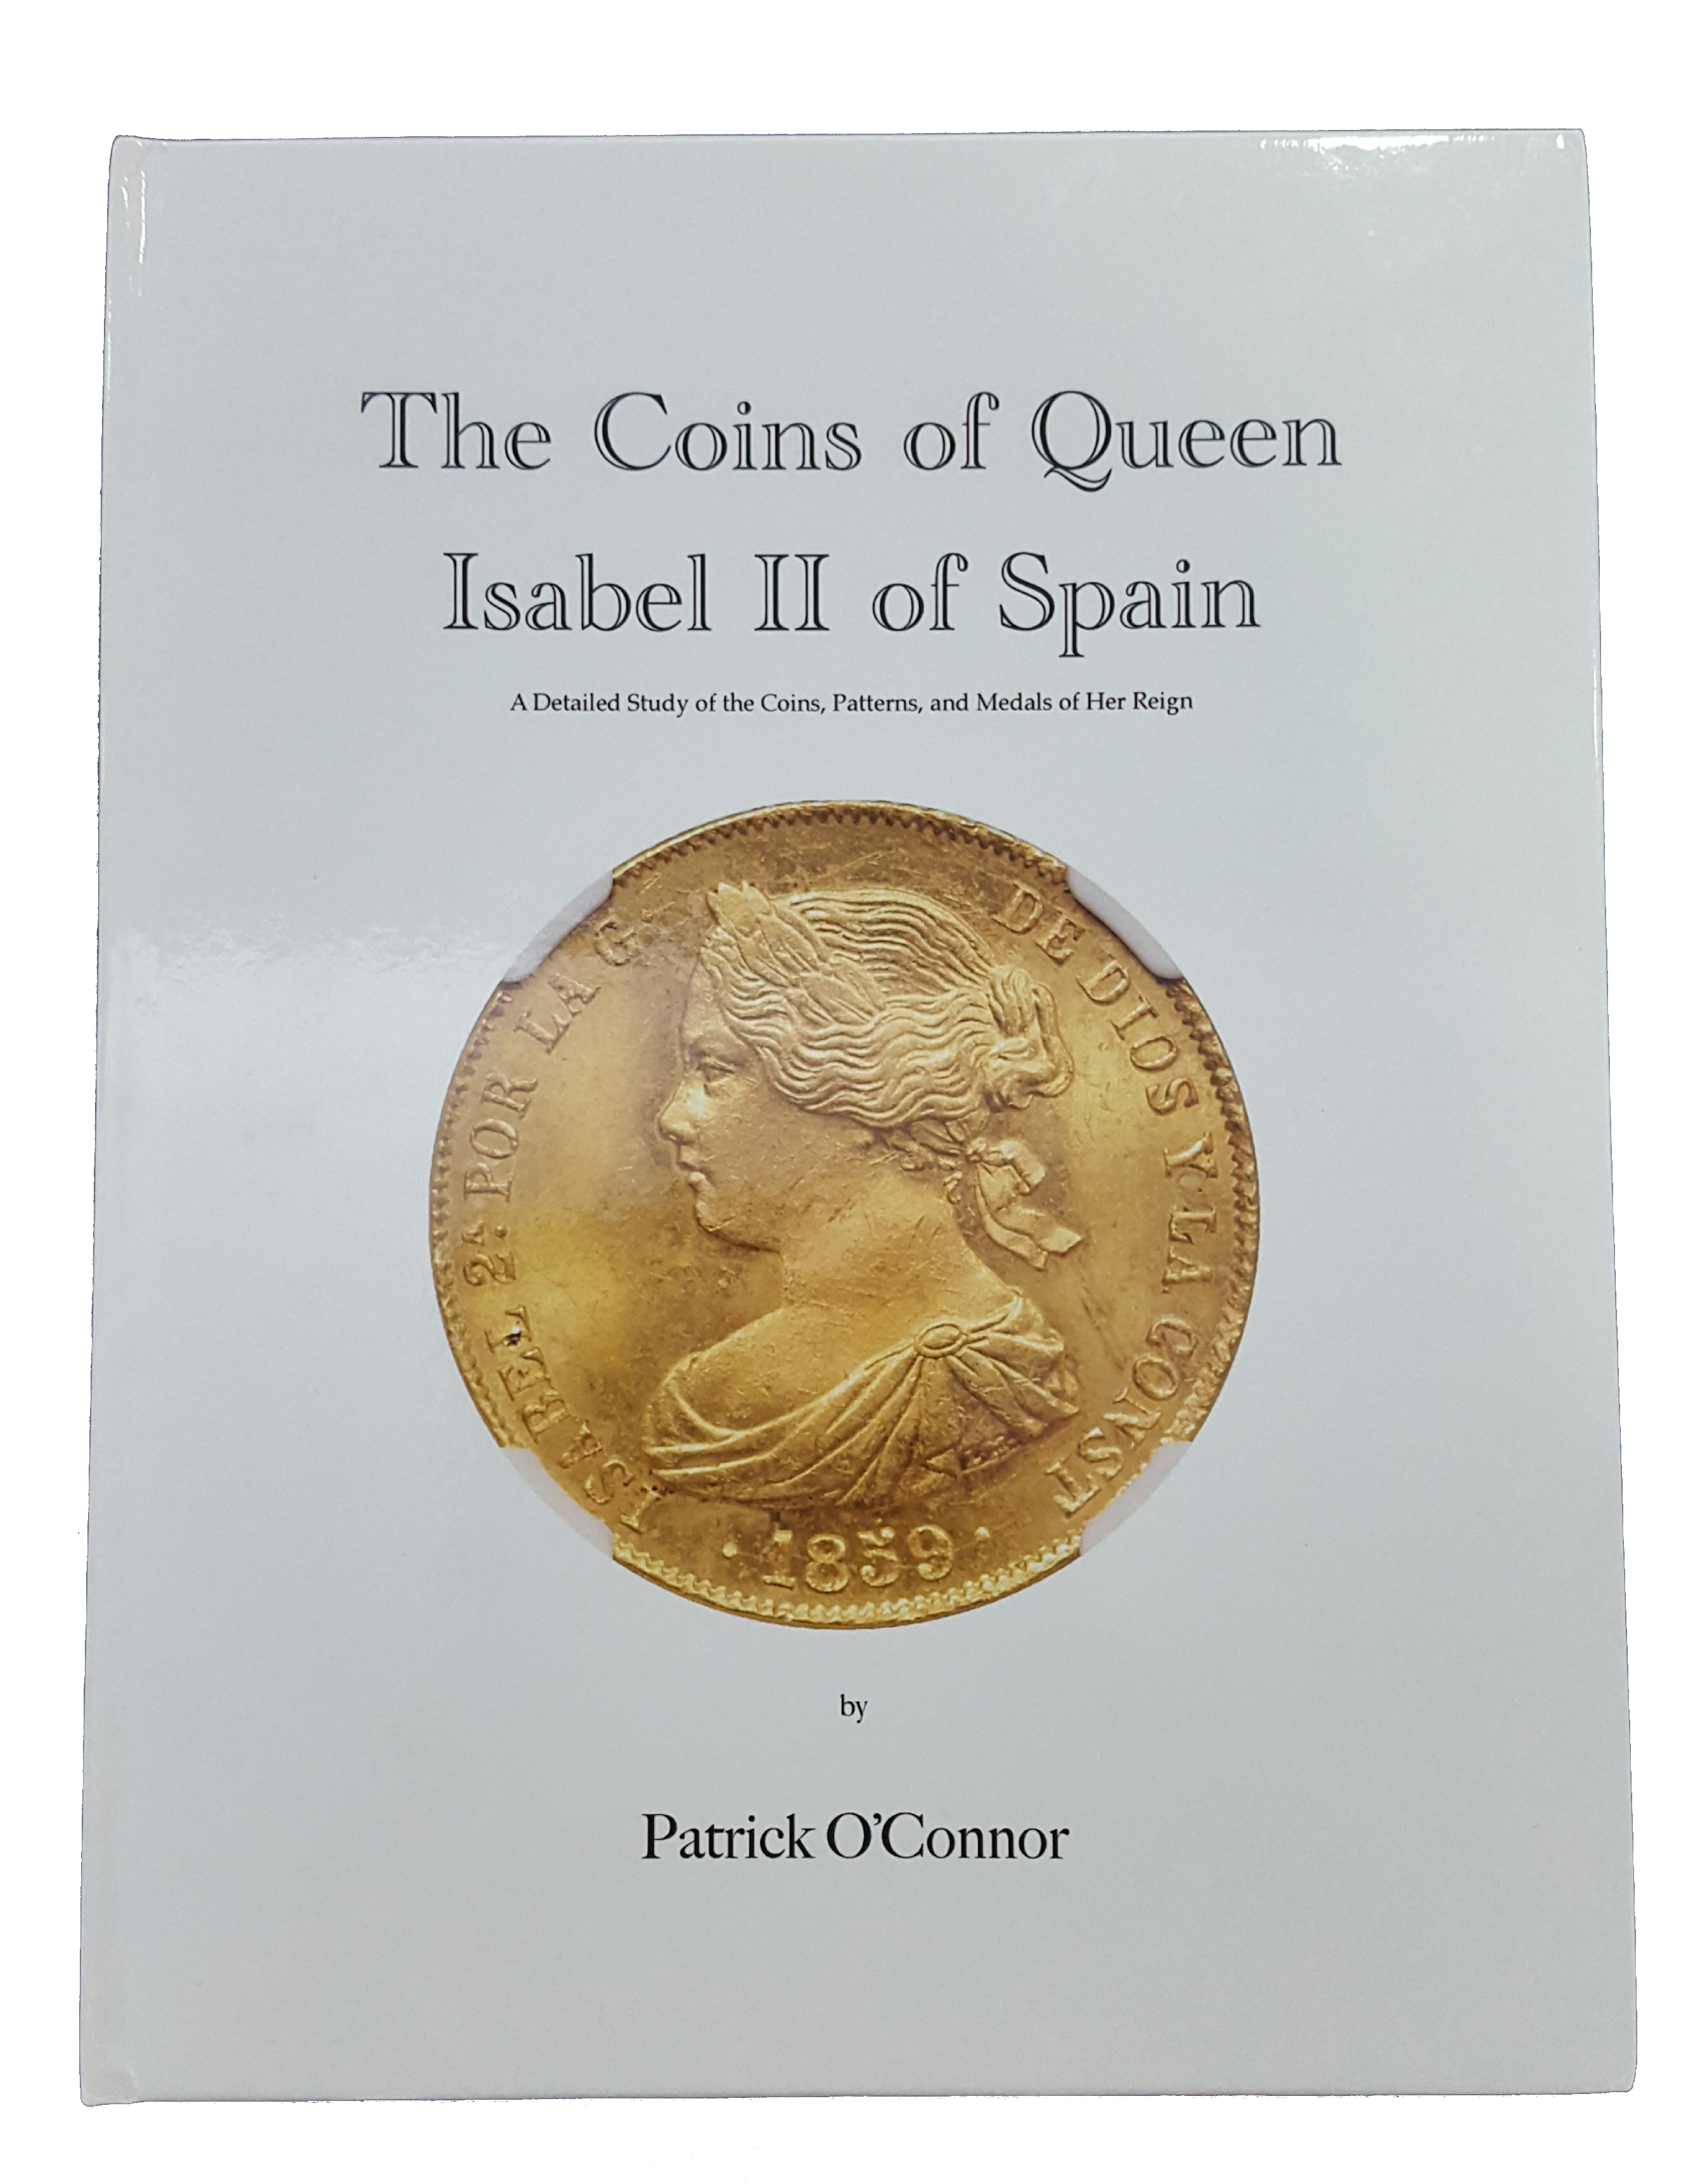 Coins of Queen Isabel II of Spain, The